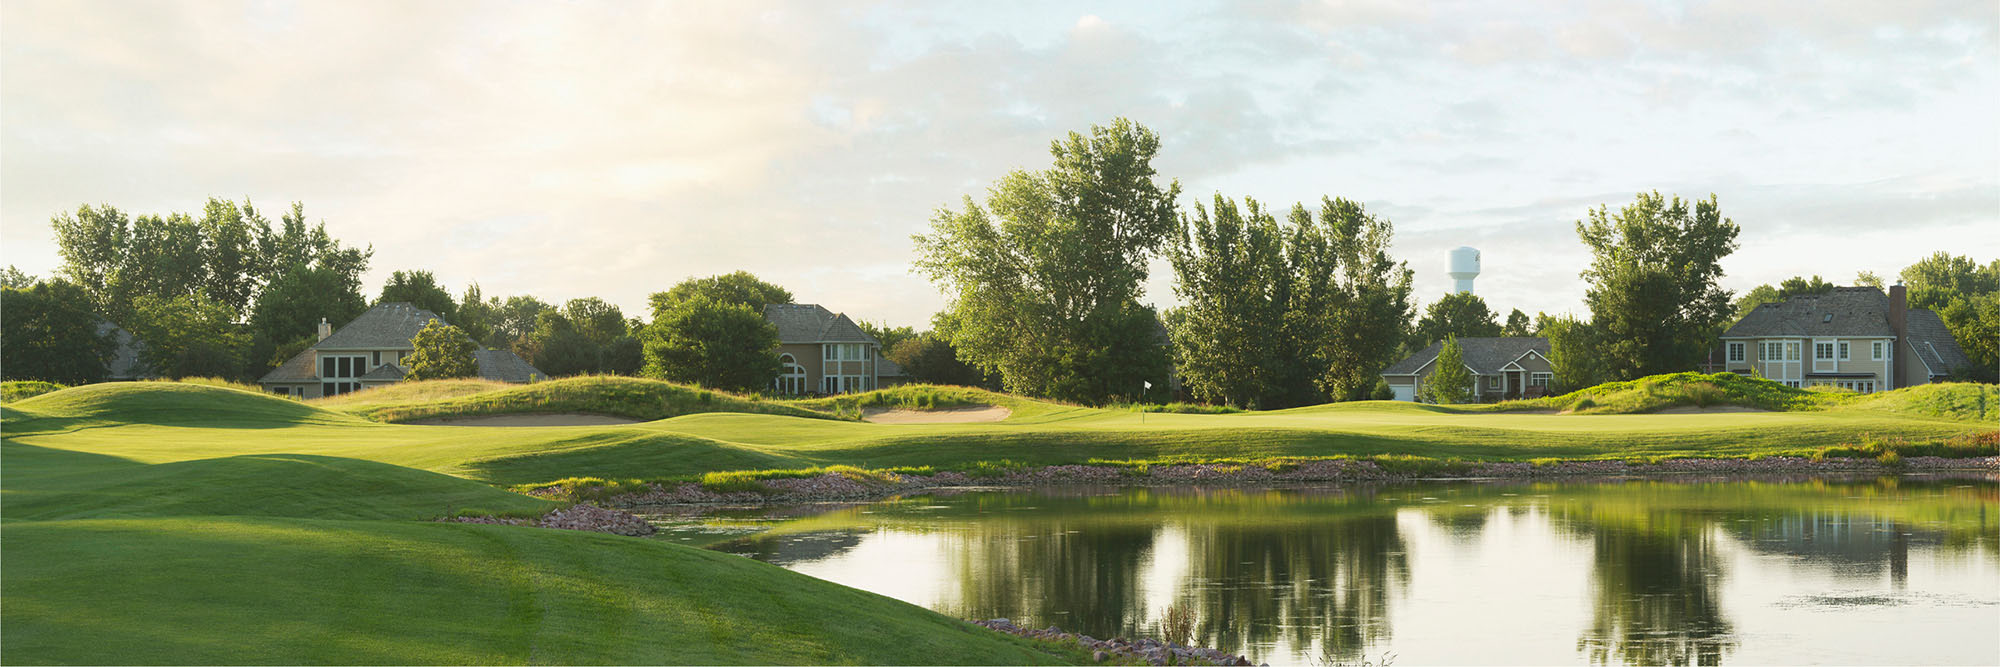 Golf Course Image - Dakota Dunes No. 11